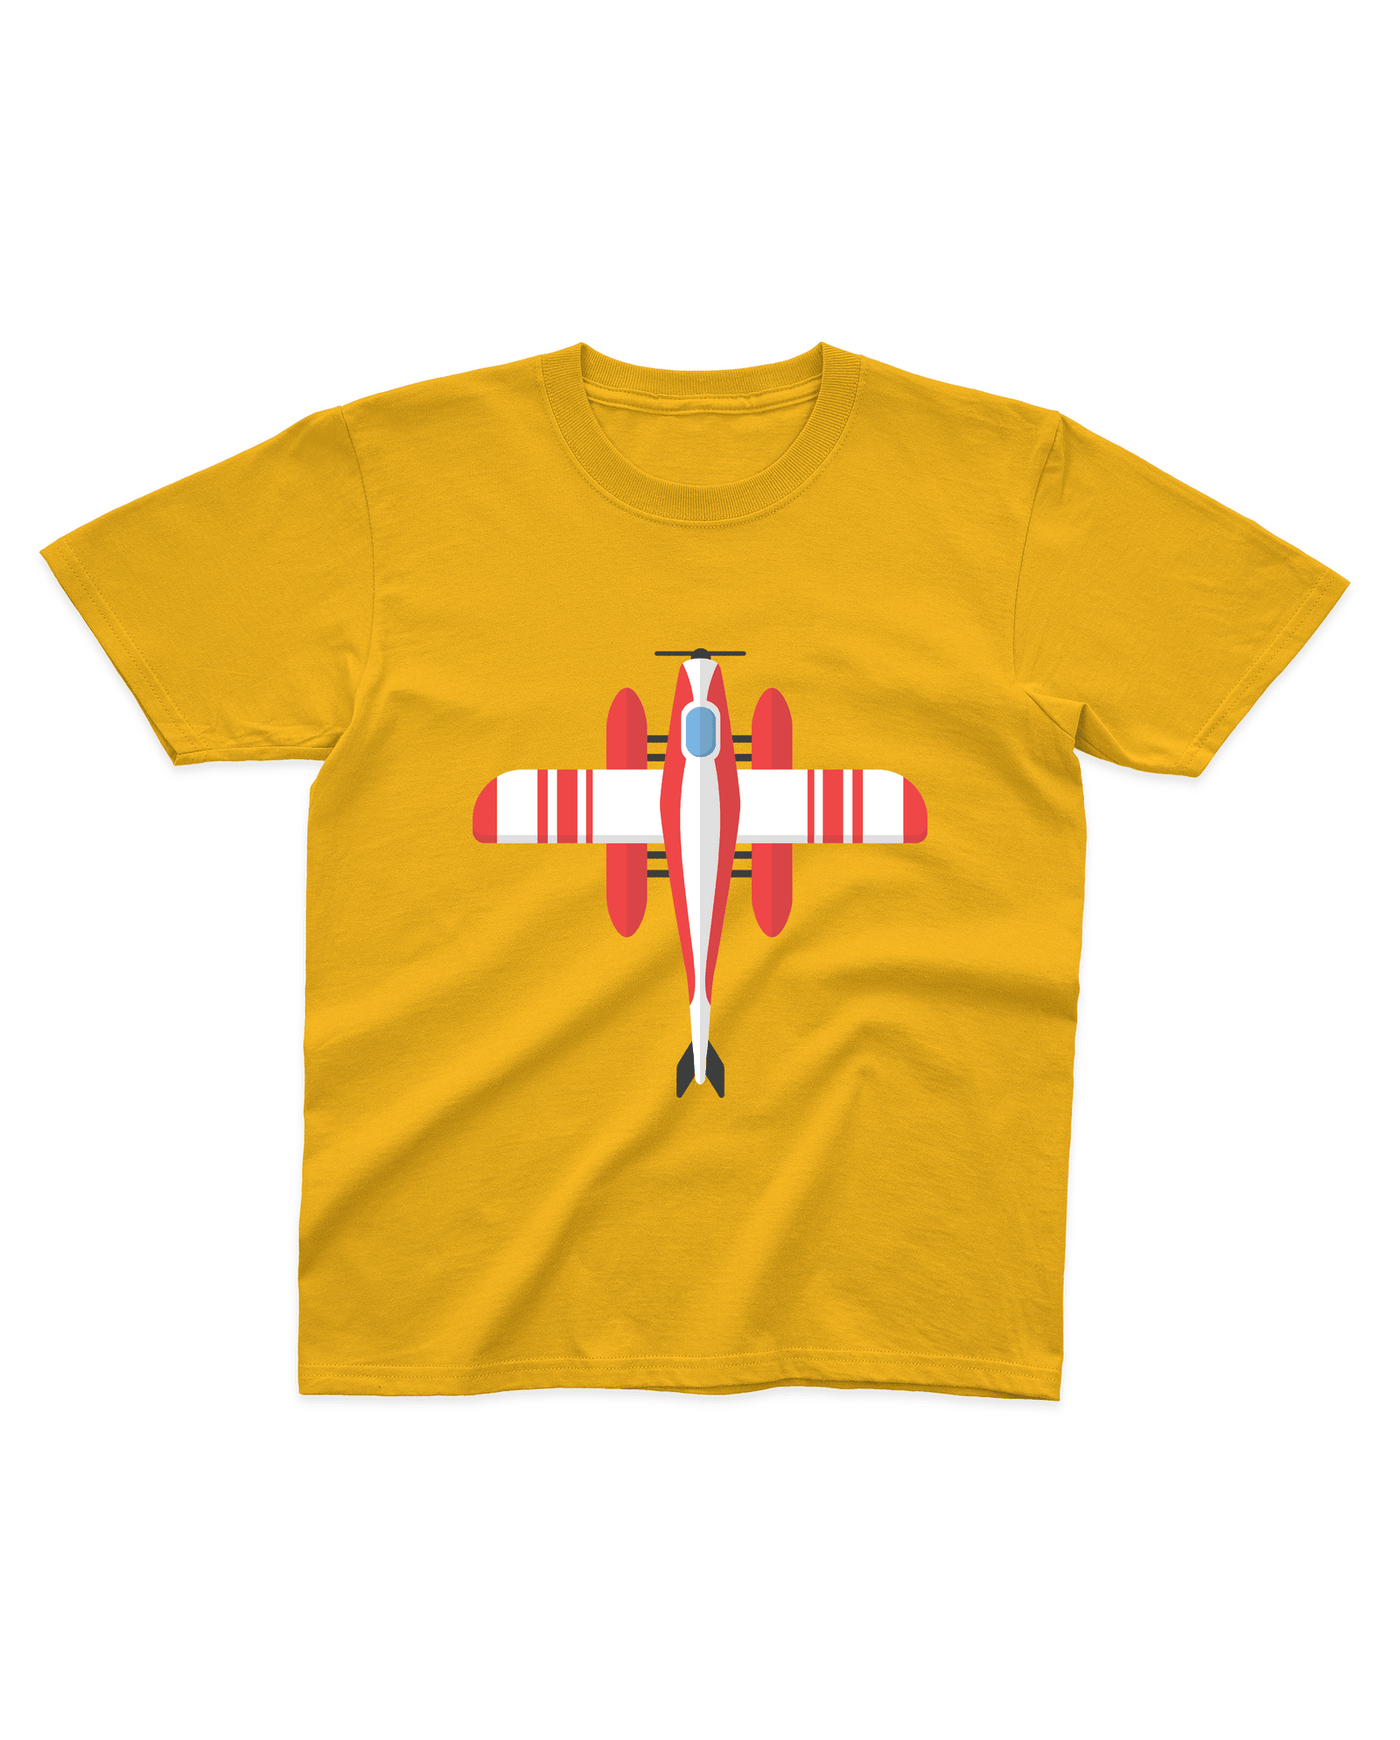 Floatplane Kids T-Shirt - Aero Armour